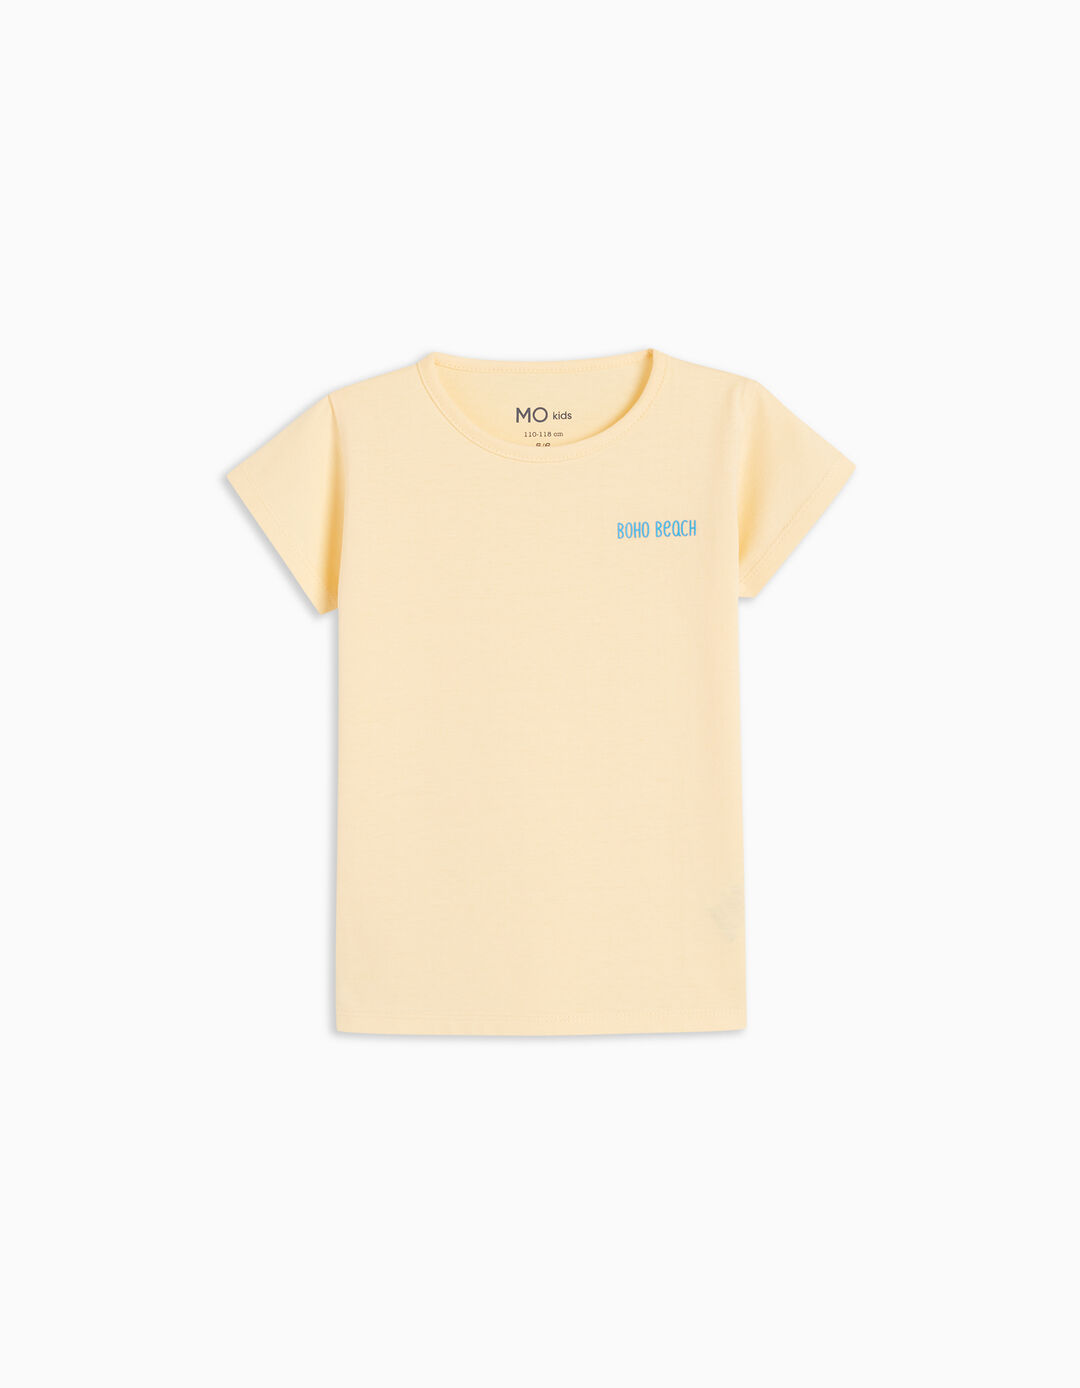 T-shirt, Girls, Light Yellow